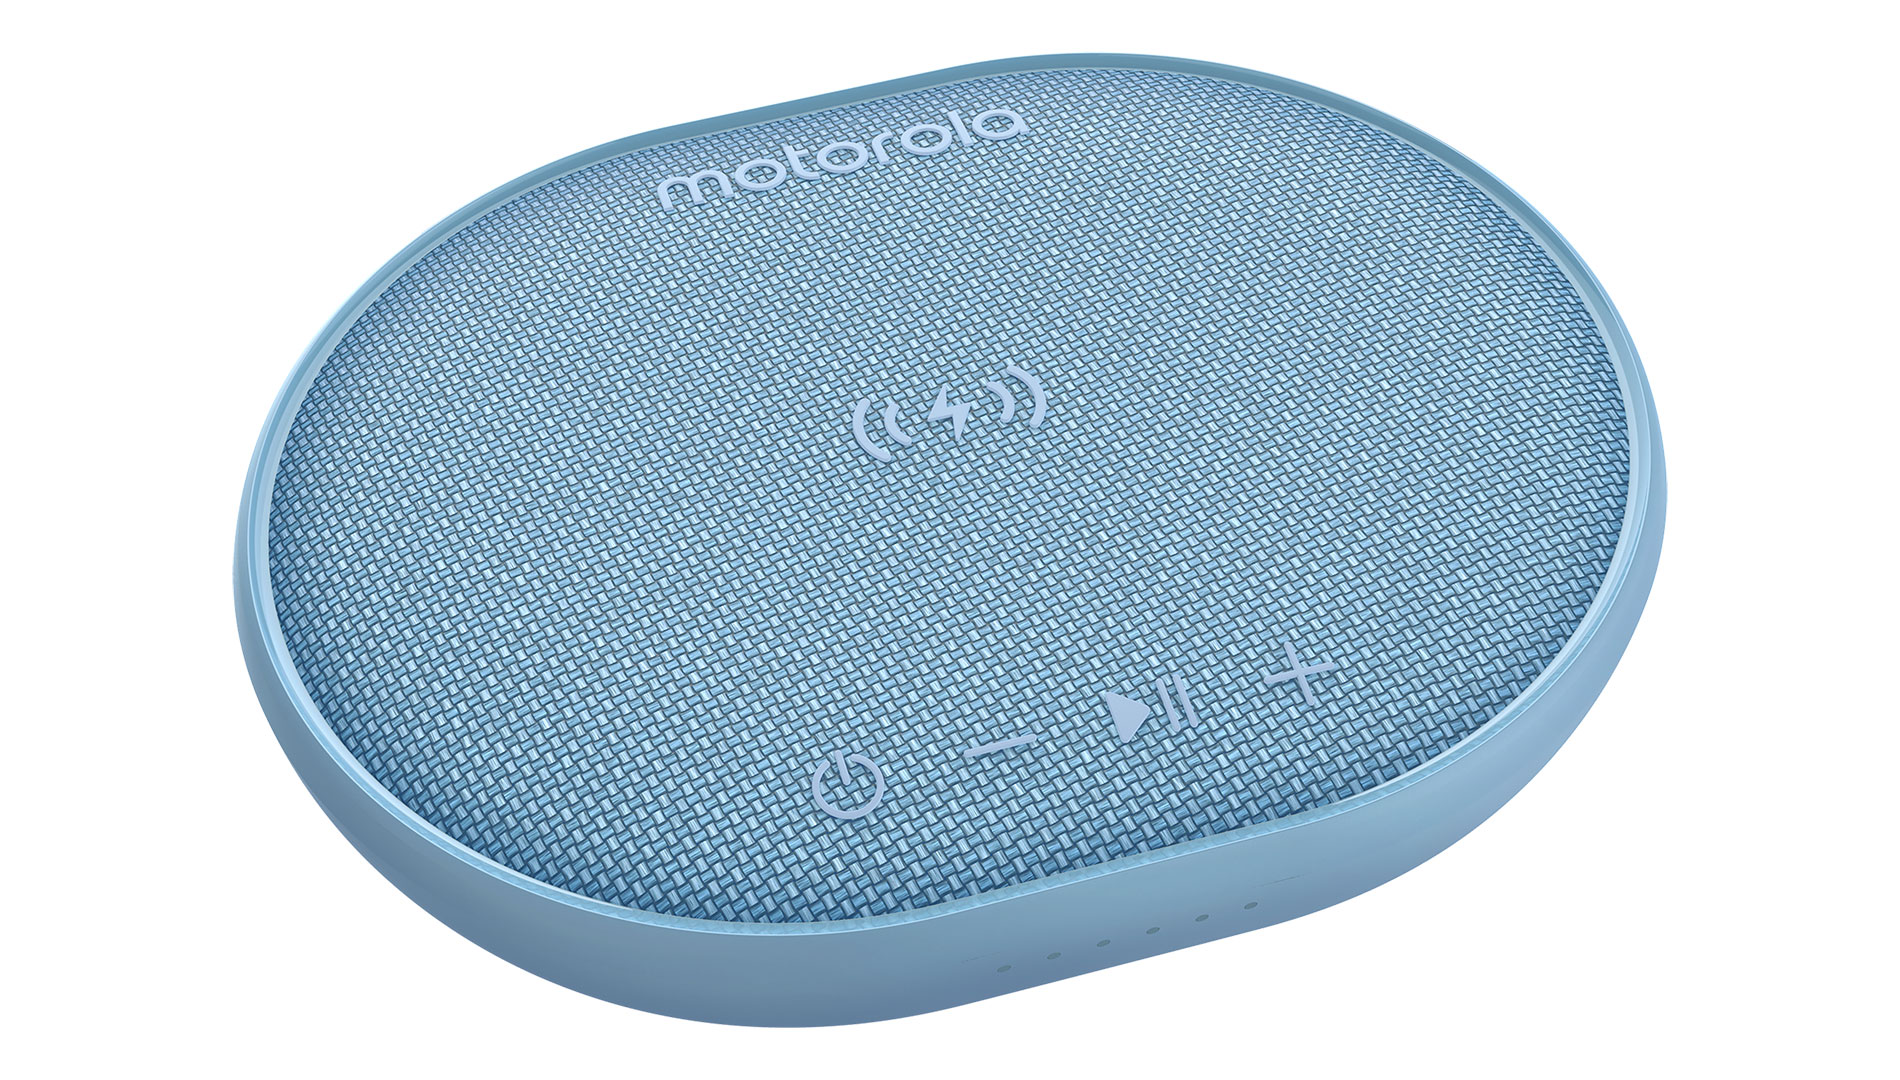 Wireless portable speaker ROKA 500 in Blue - product image